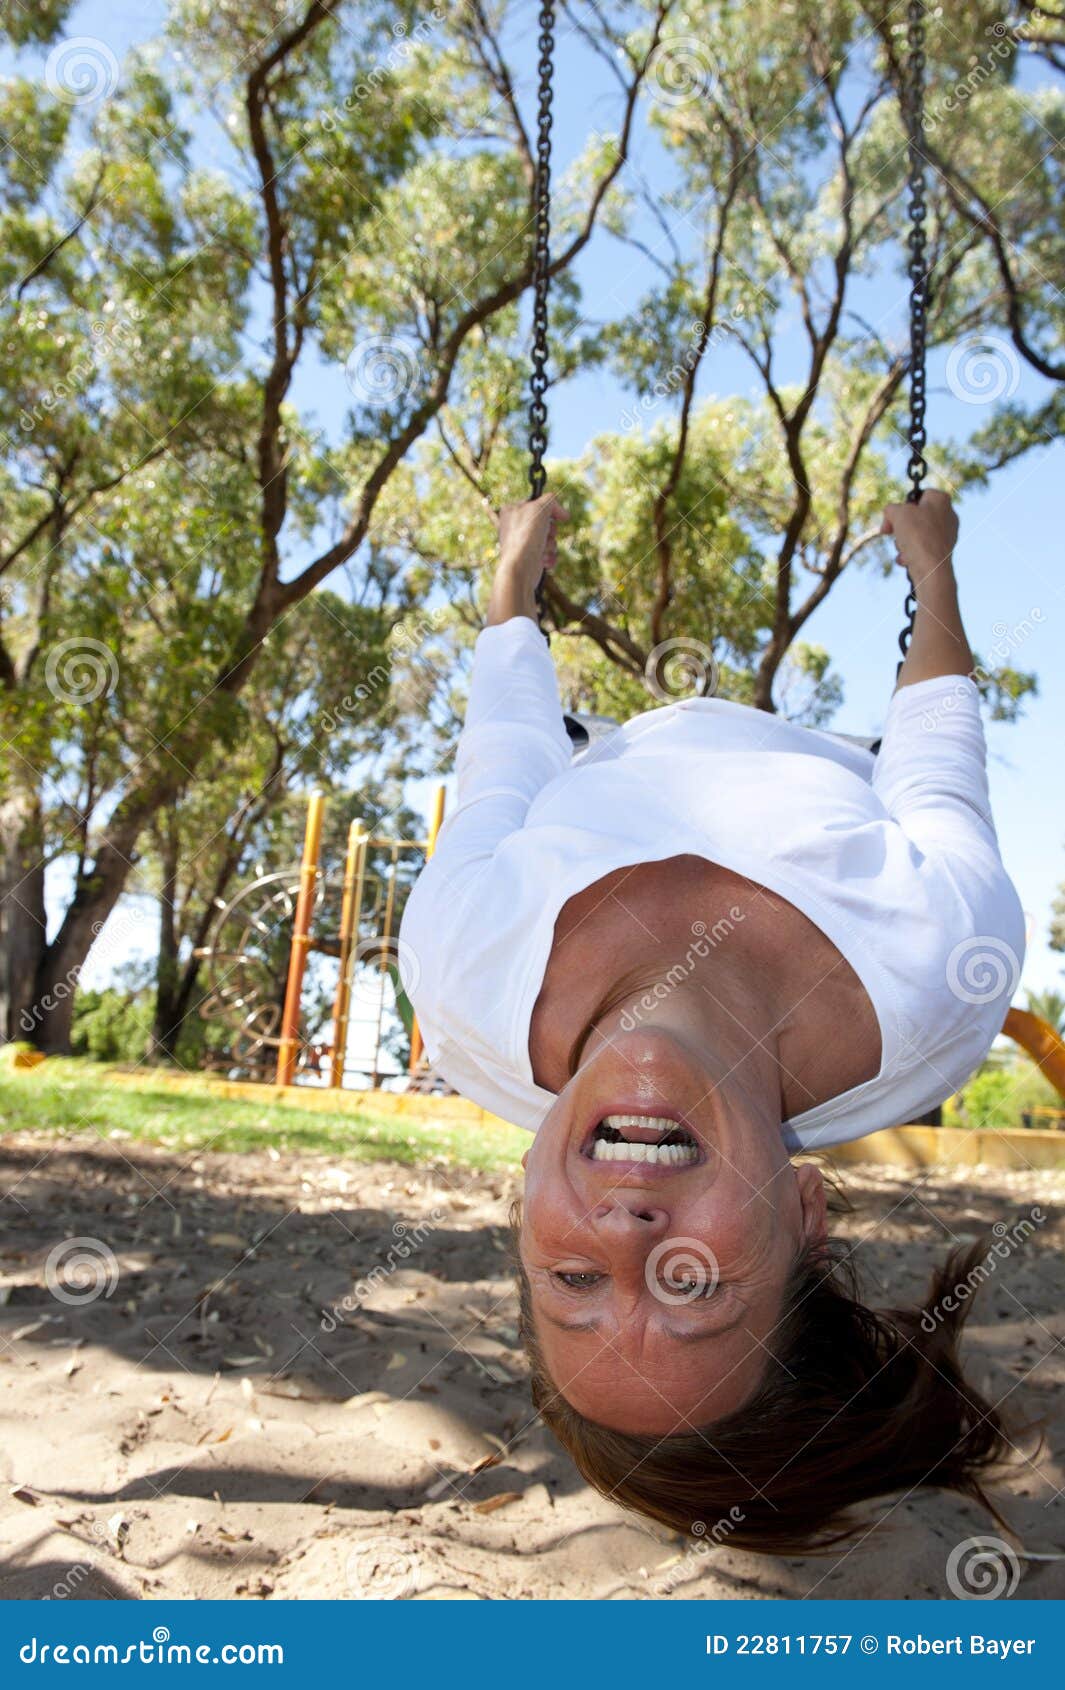 Mature Woman Swinging on Playground Upside Down Stock Image pic